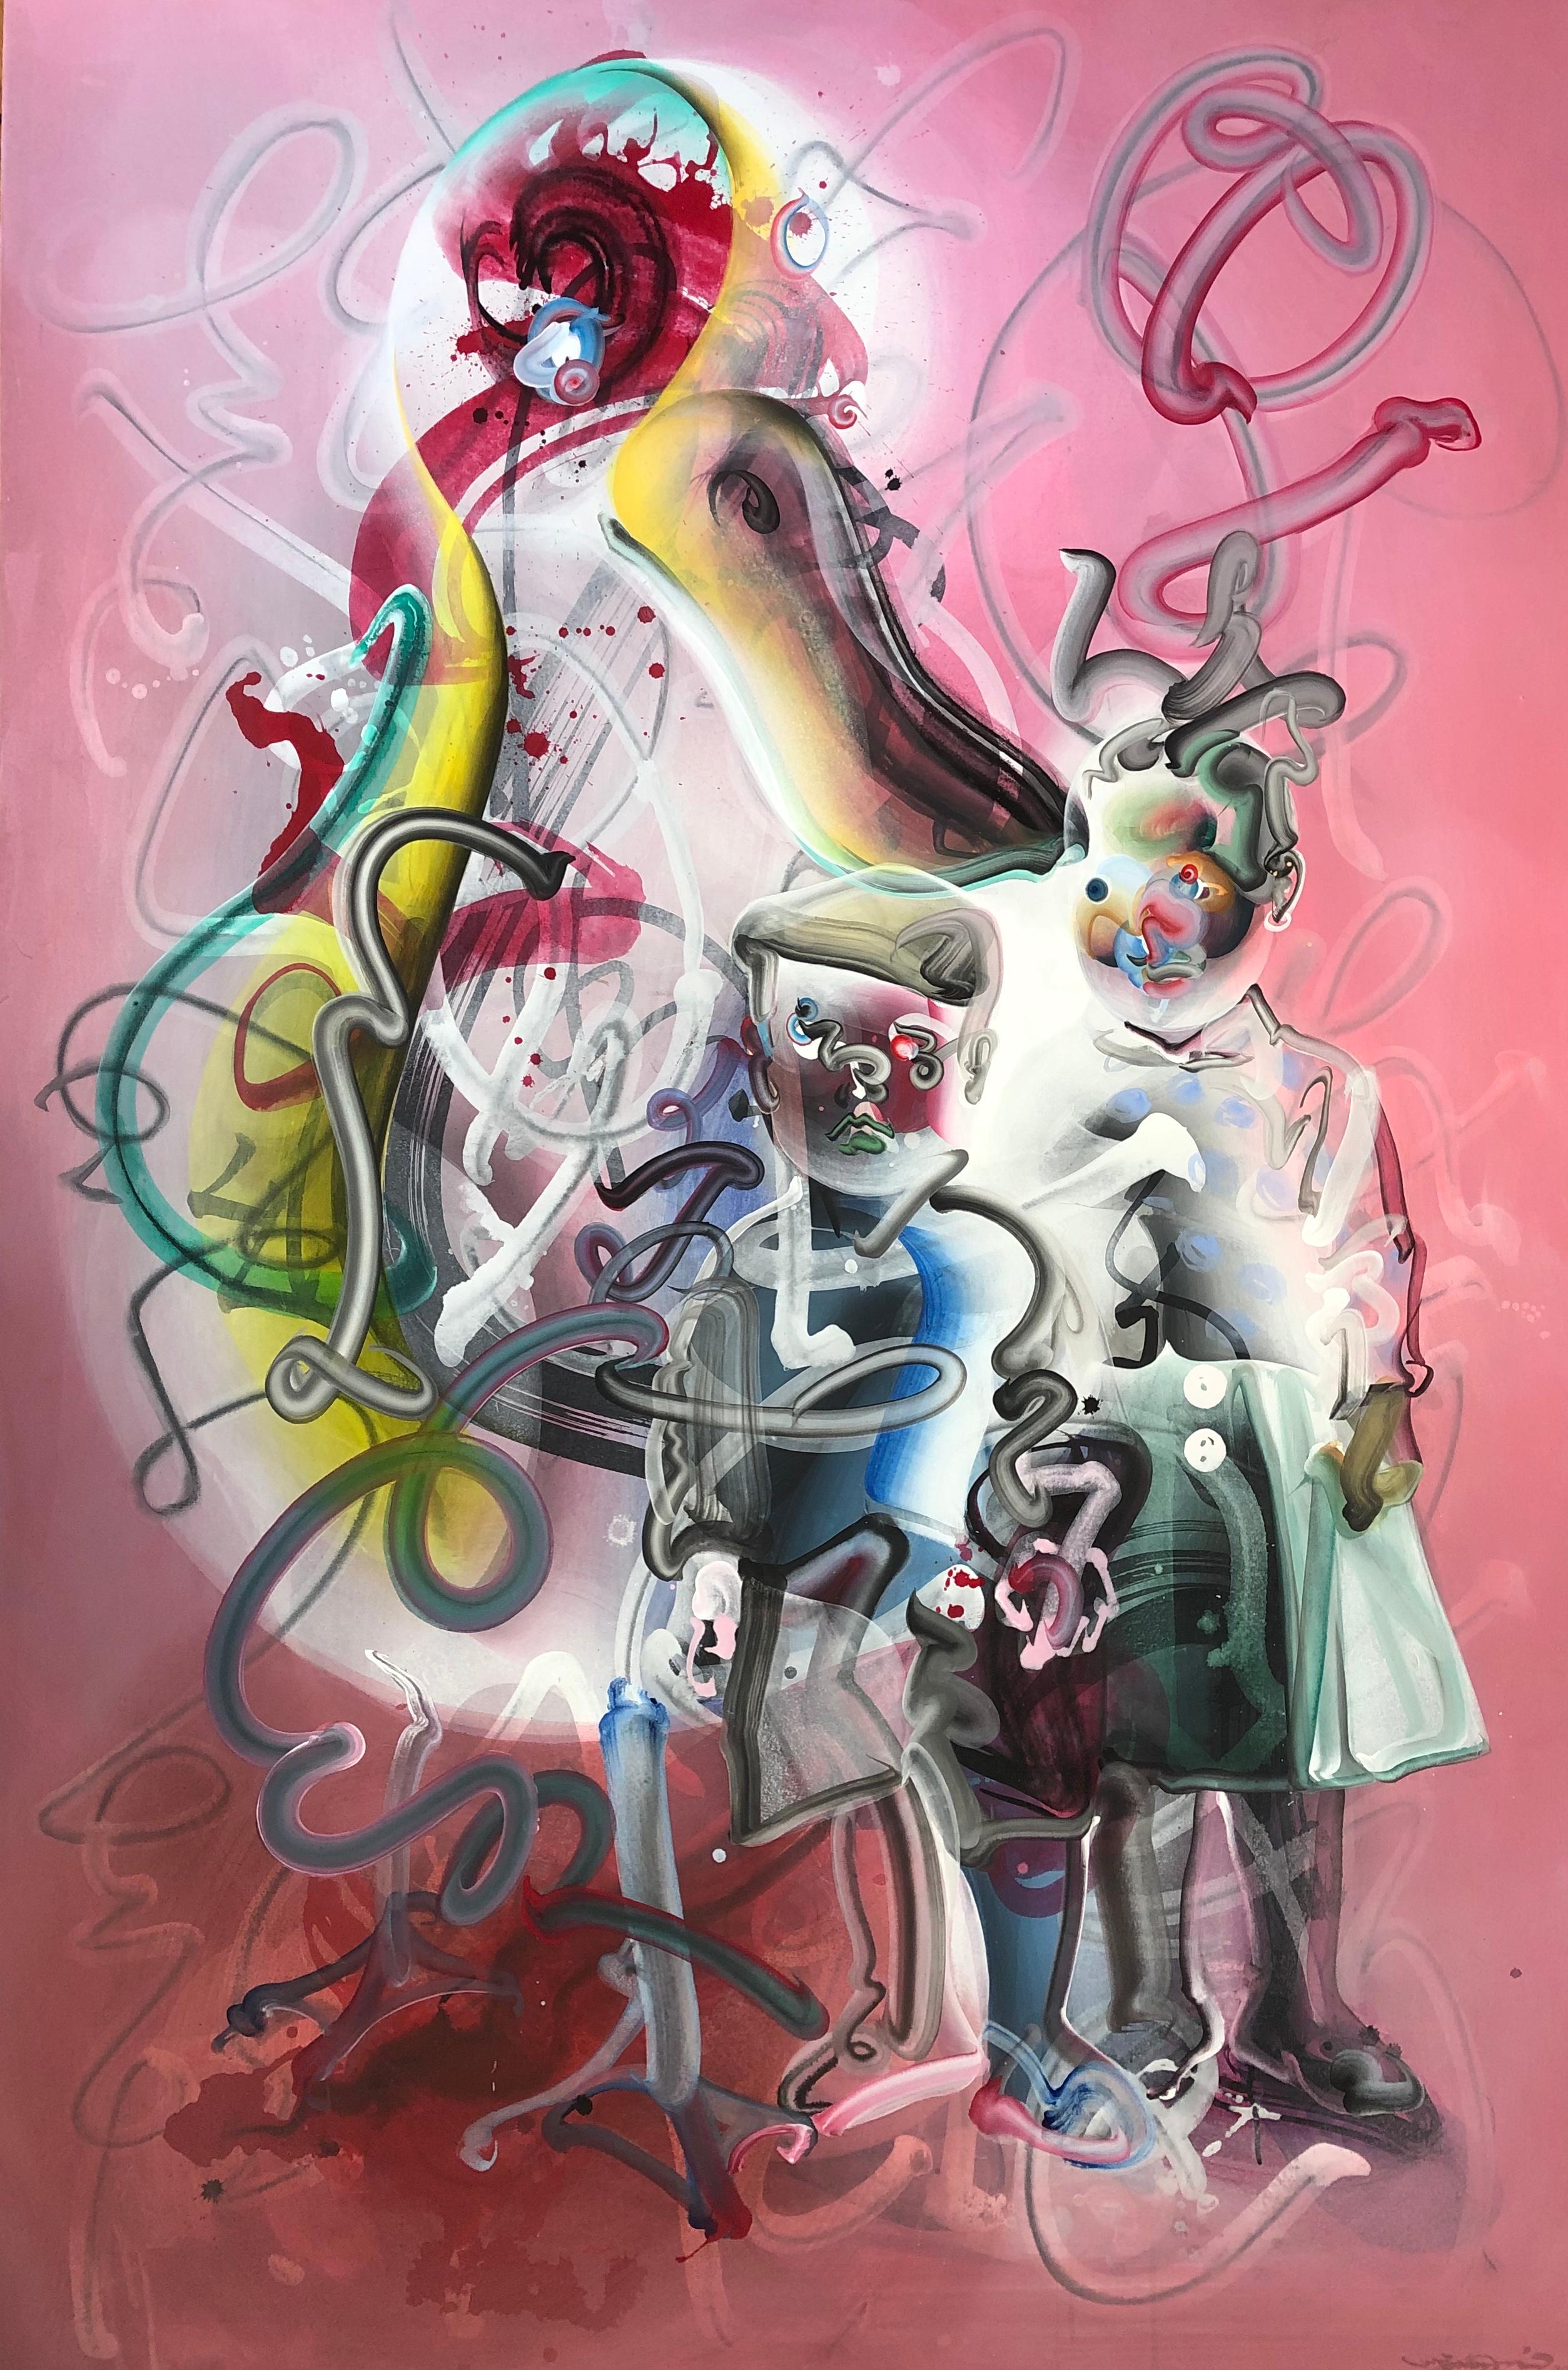 Memory, pink and green abstract painting - Mixed Media Art by Jongwang Lee